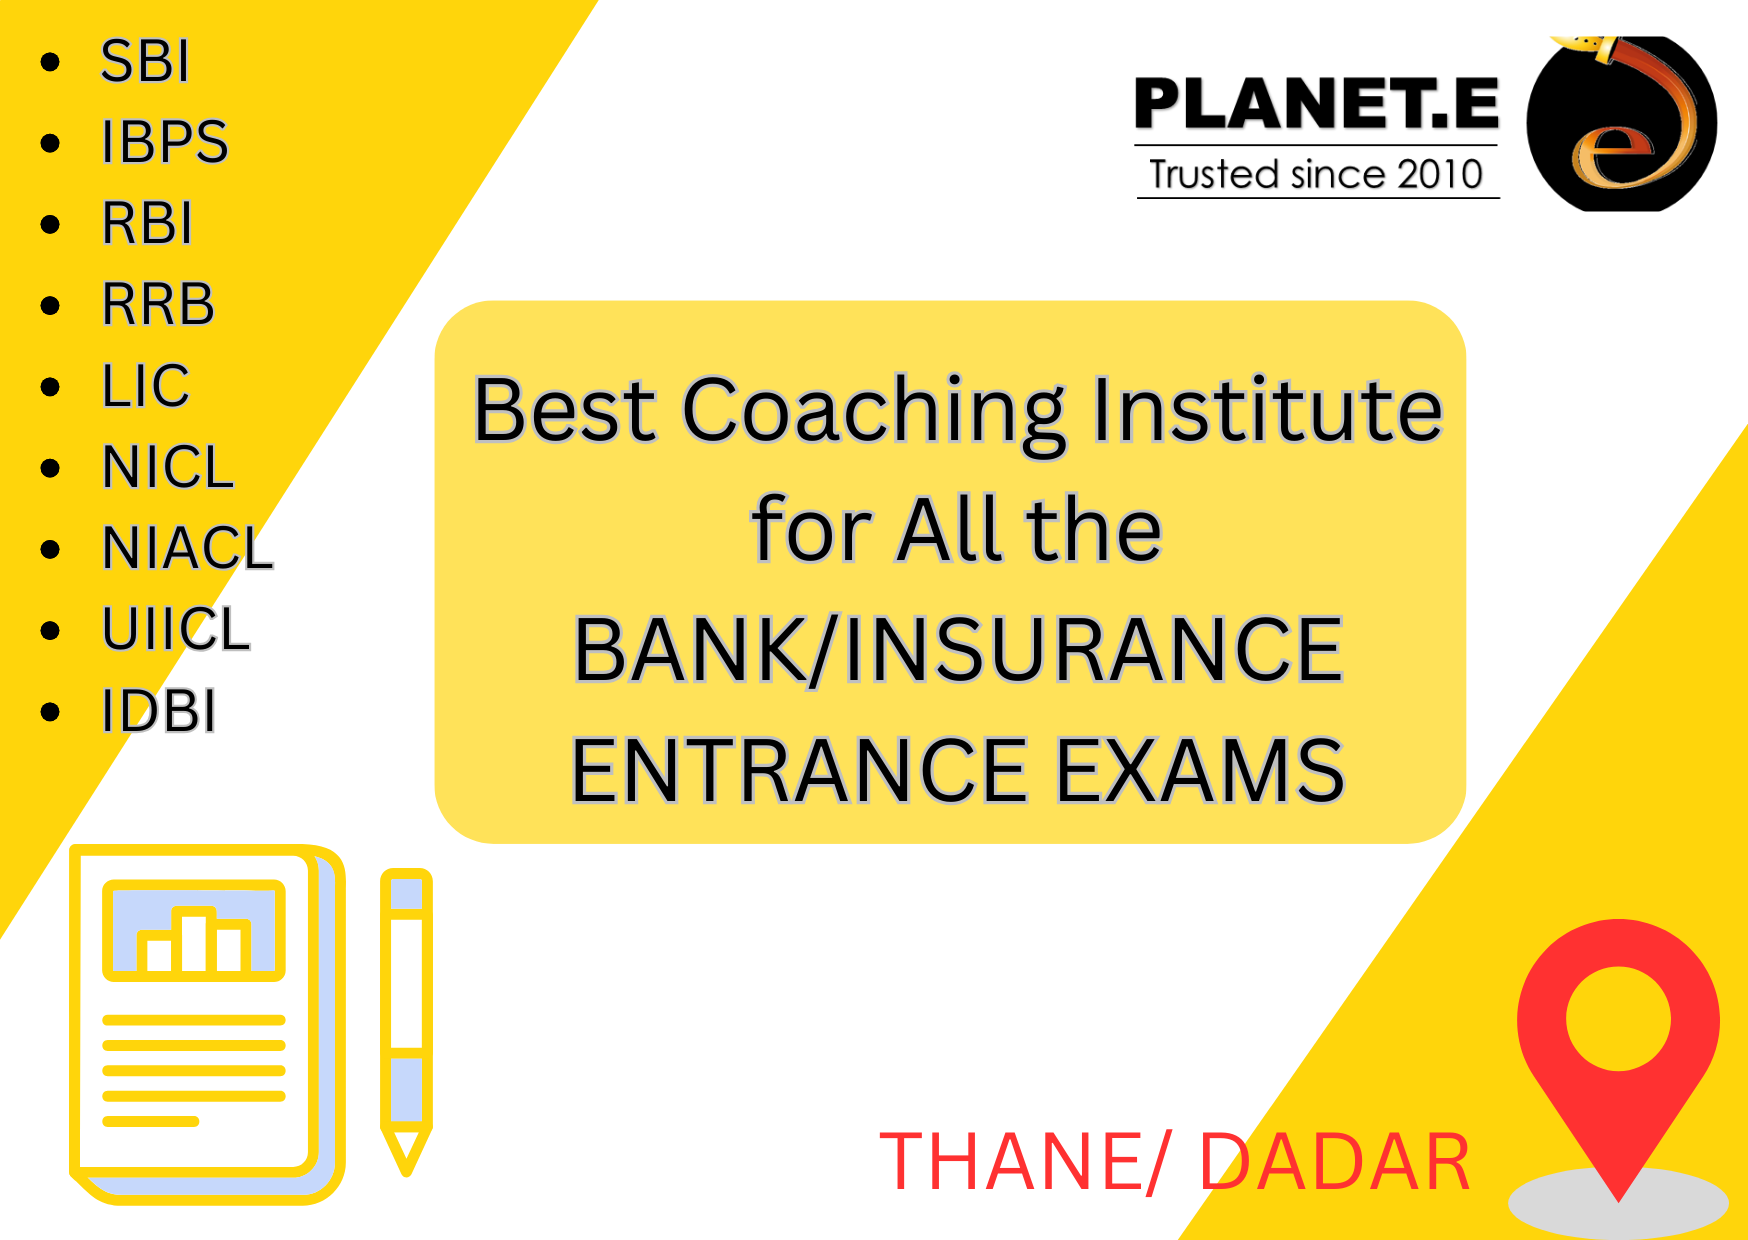 Best Banking/ Insurance Institute